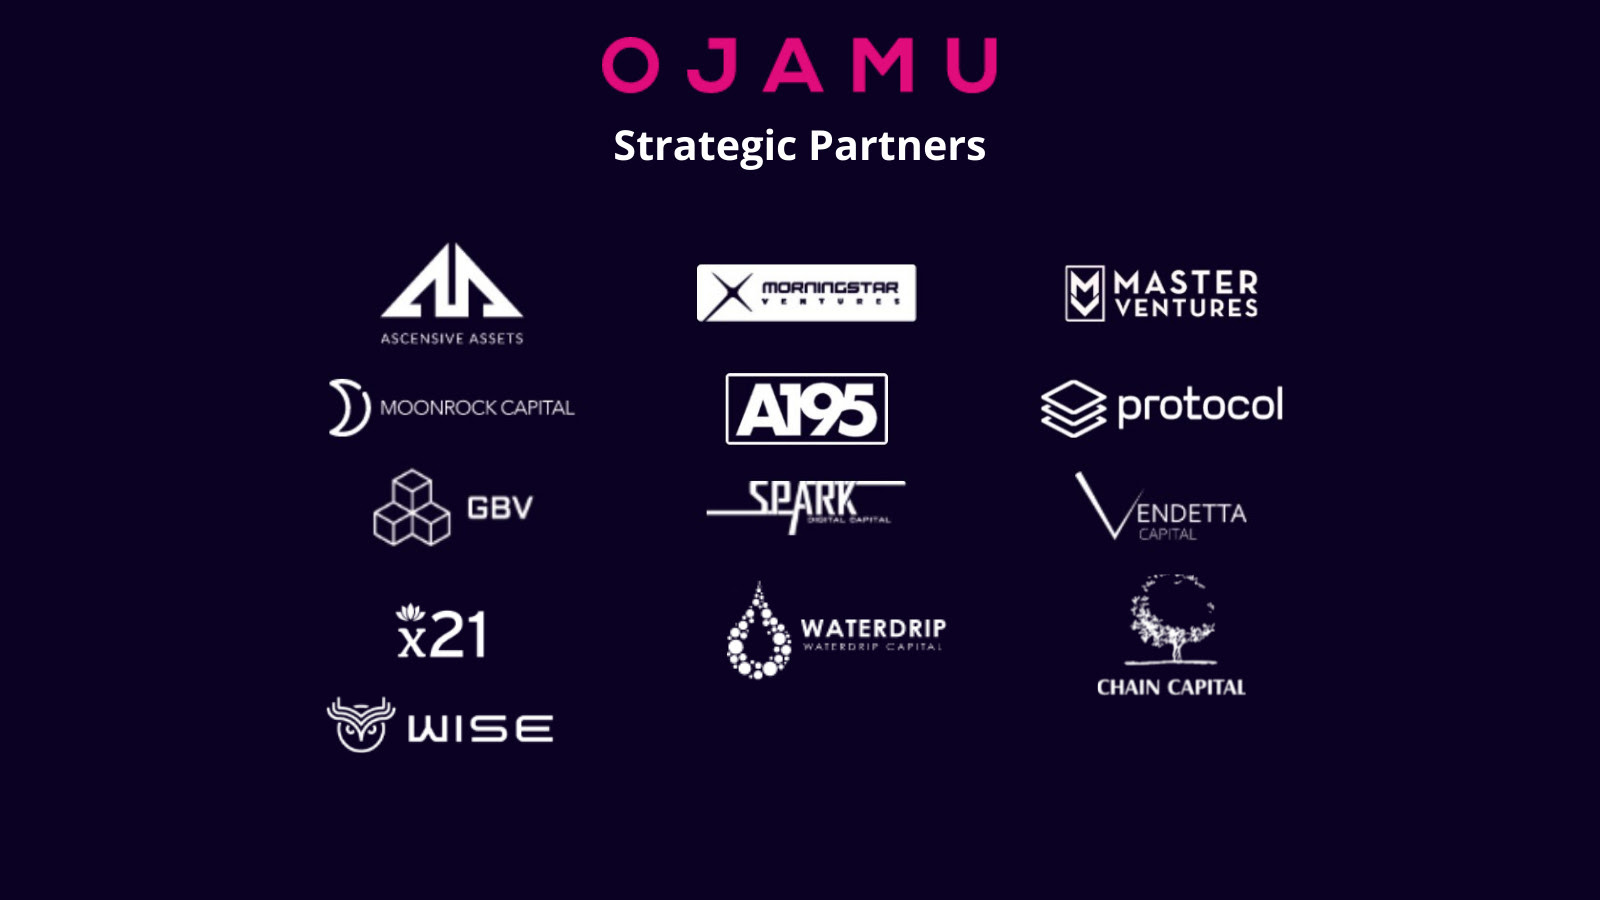 Marketing Technology Platform Ojamu Announces The Closing Of Its $1.7 Million Private Sale